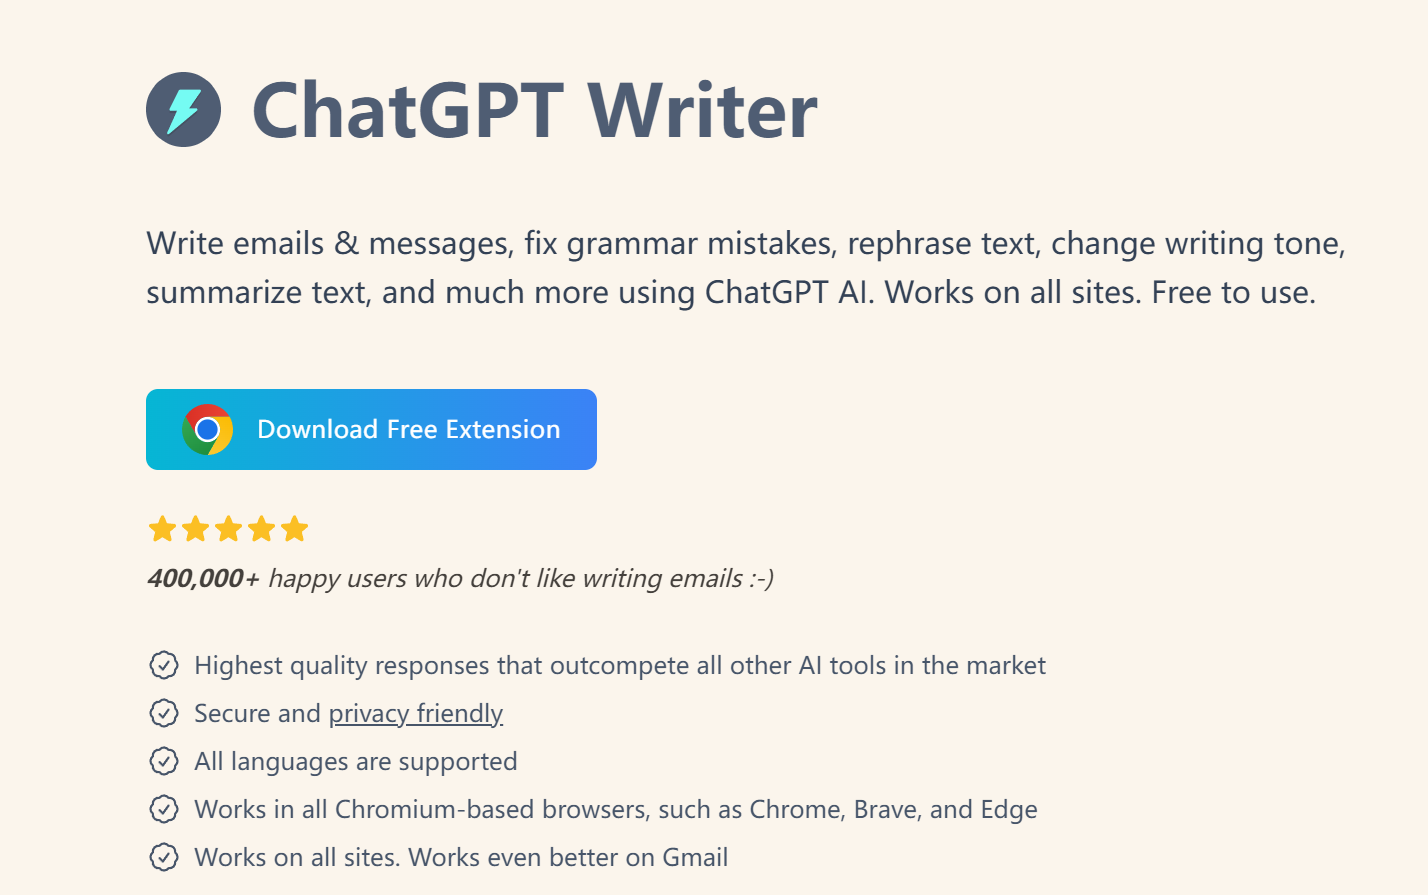 chatgpt-writer